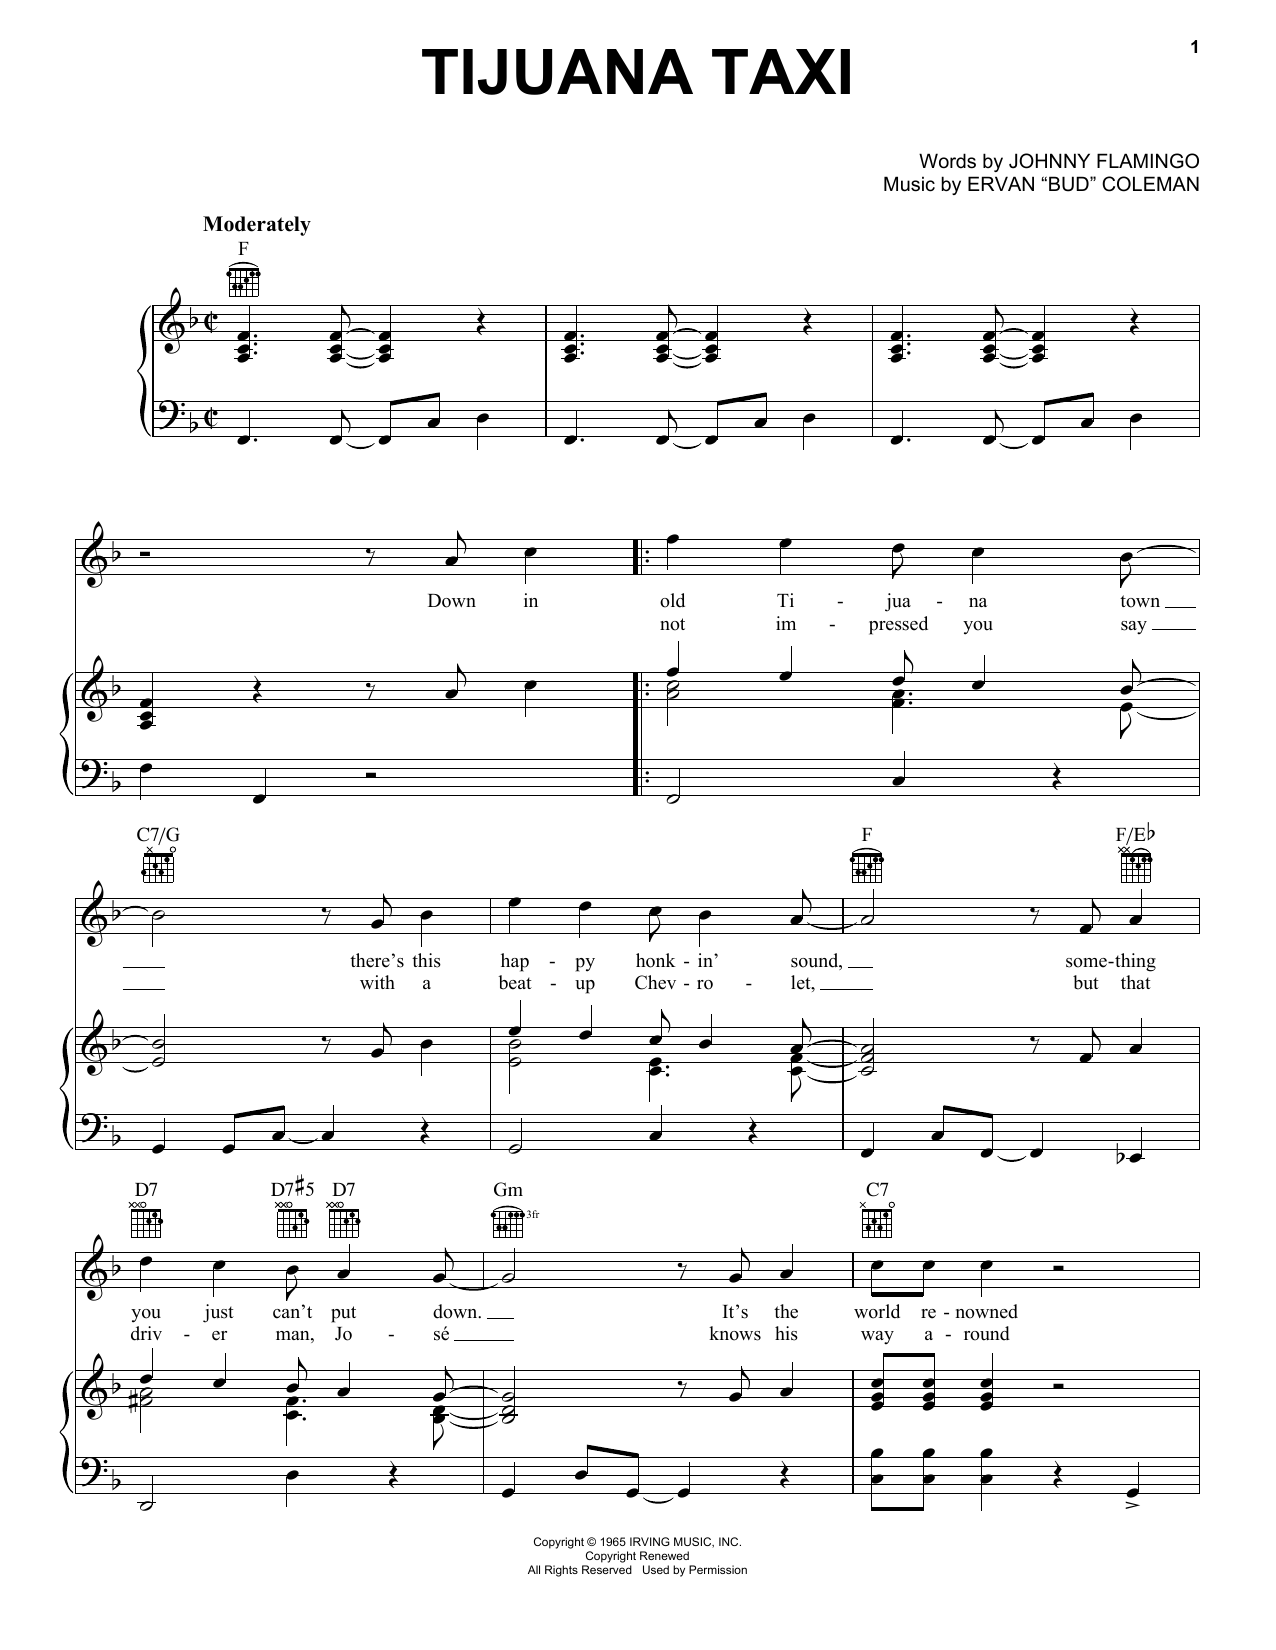 Herb Alpert & The Tijuana Brass Band Tijuana Taxi Sheet Music Notes & Chords for Clarinet - Download or Print PDF